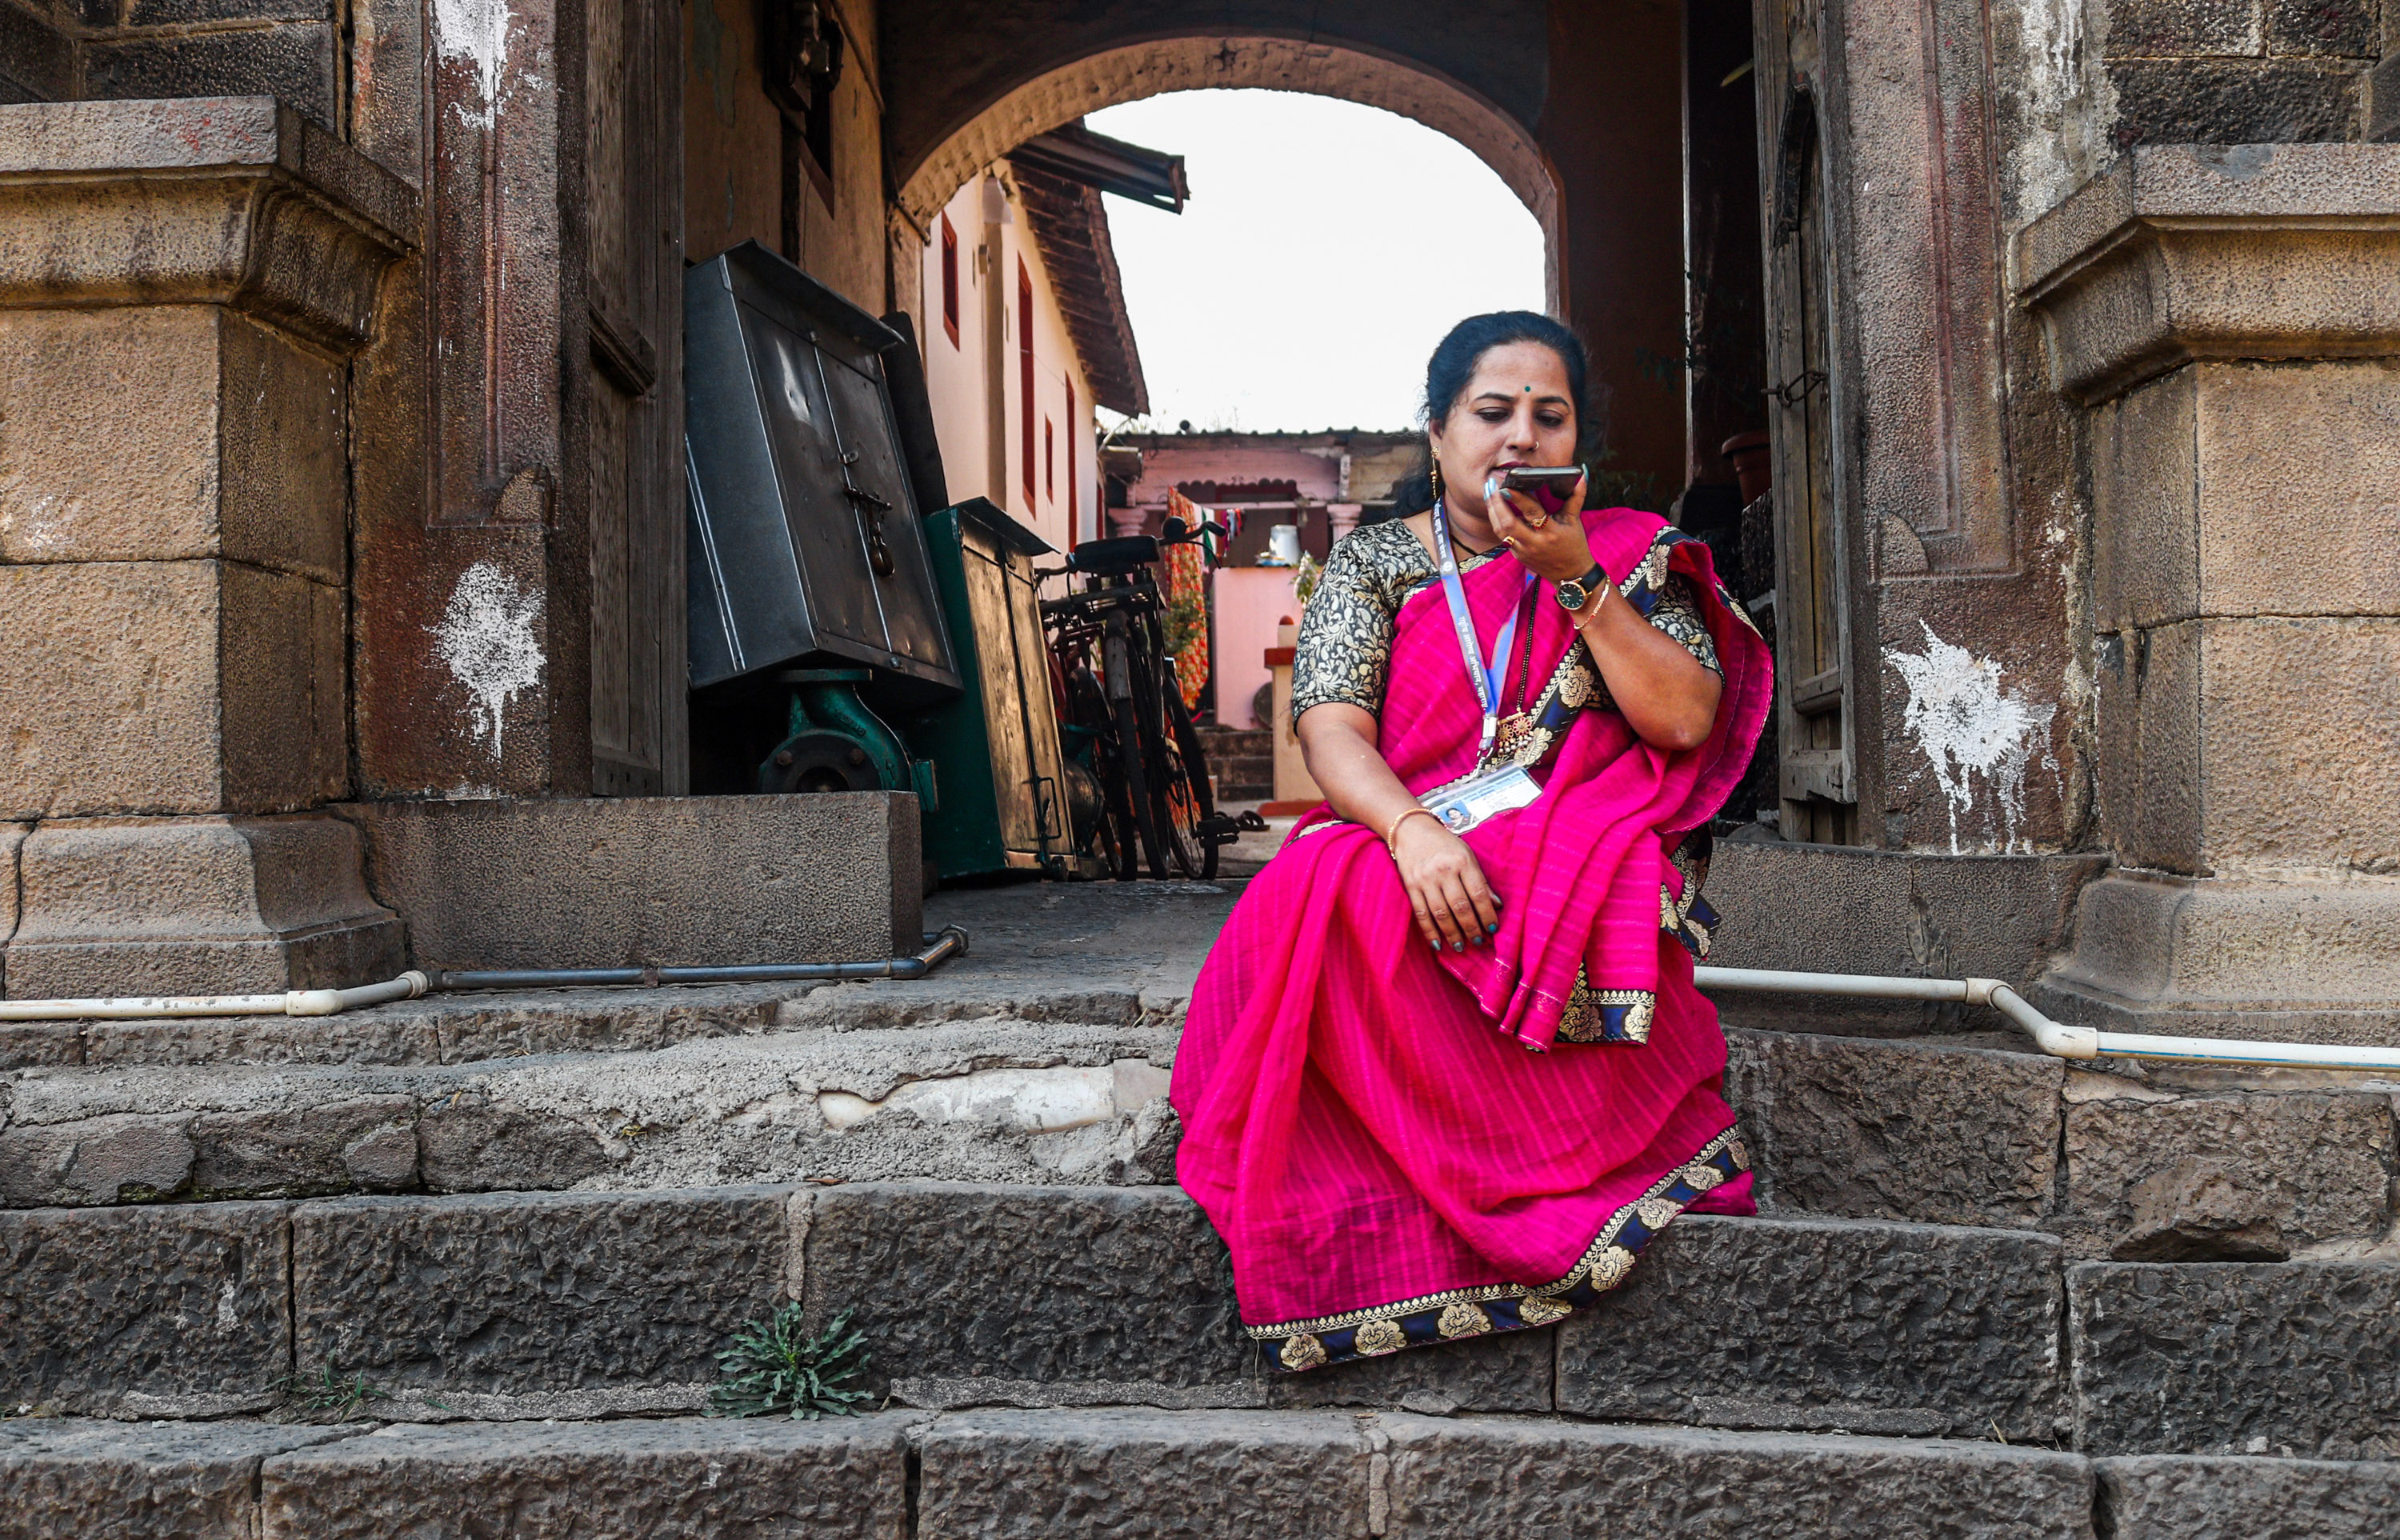 Pregnant Woman In Indian Sari Dress Stock Photo - Download Image